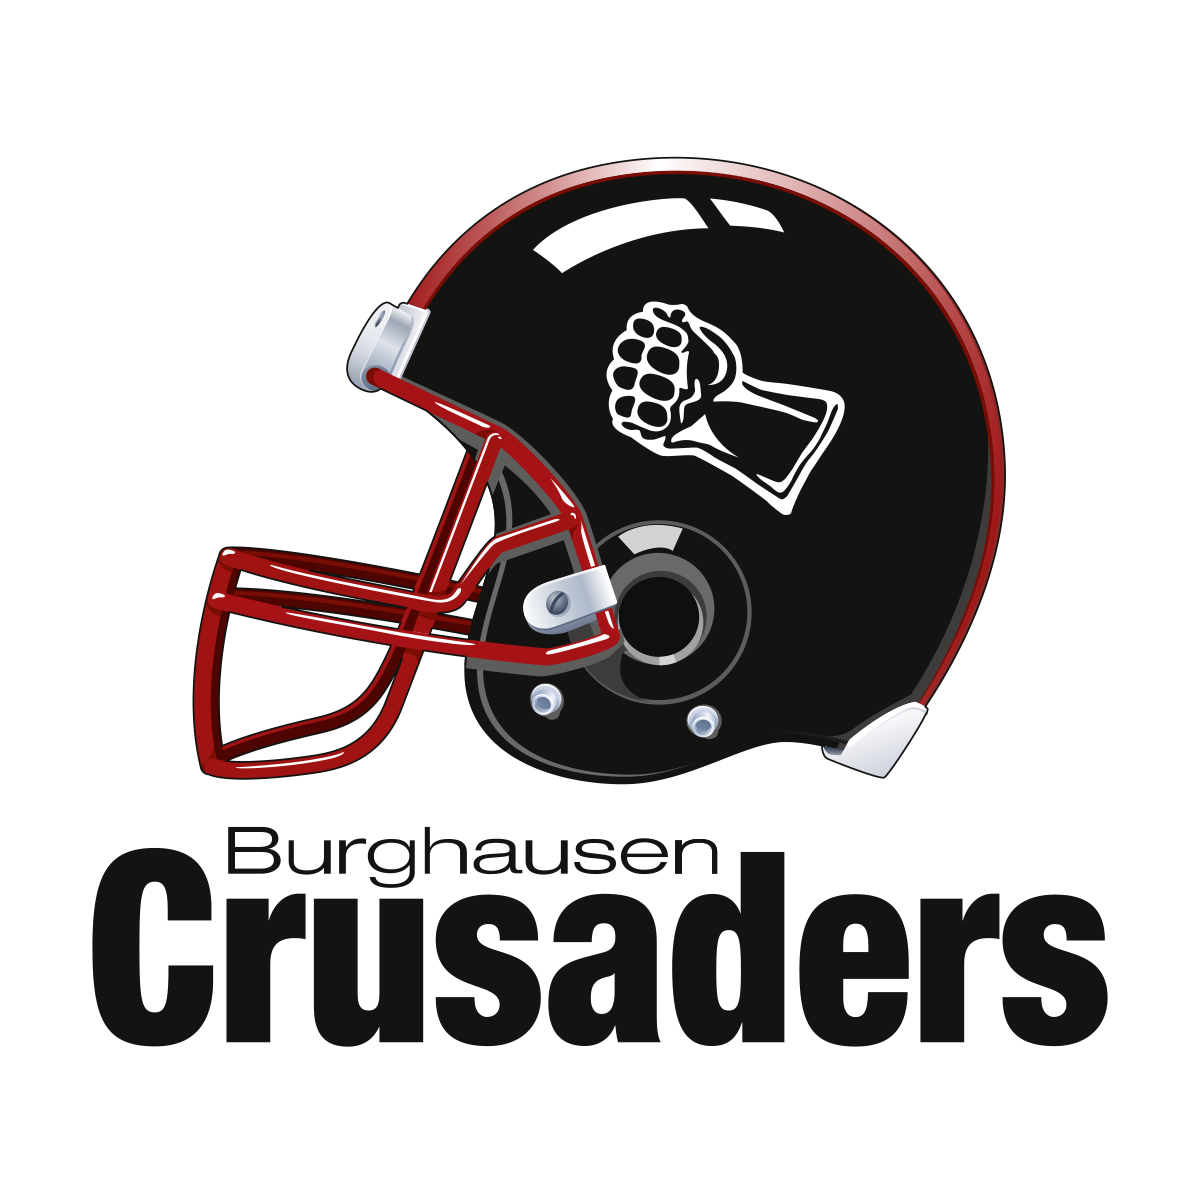 Burghausen Crusaders